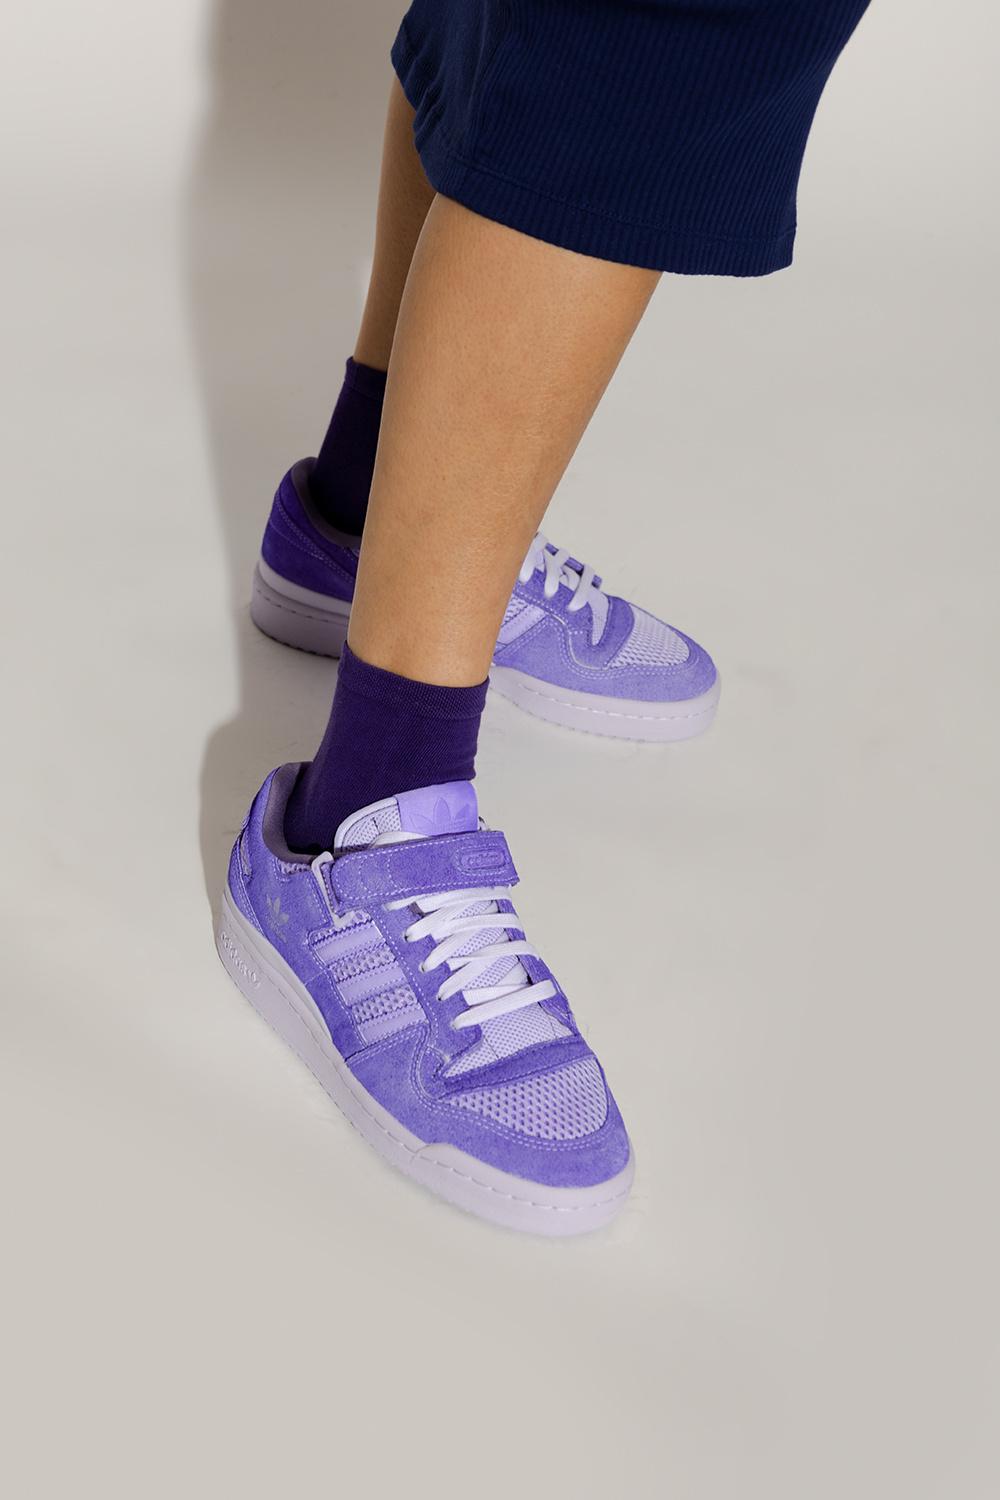 adidas Originals 'forum 84 Low 8k' Sneakers in Blue | Lyst